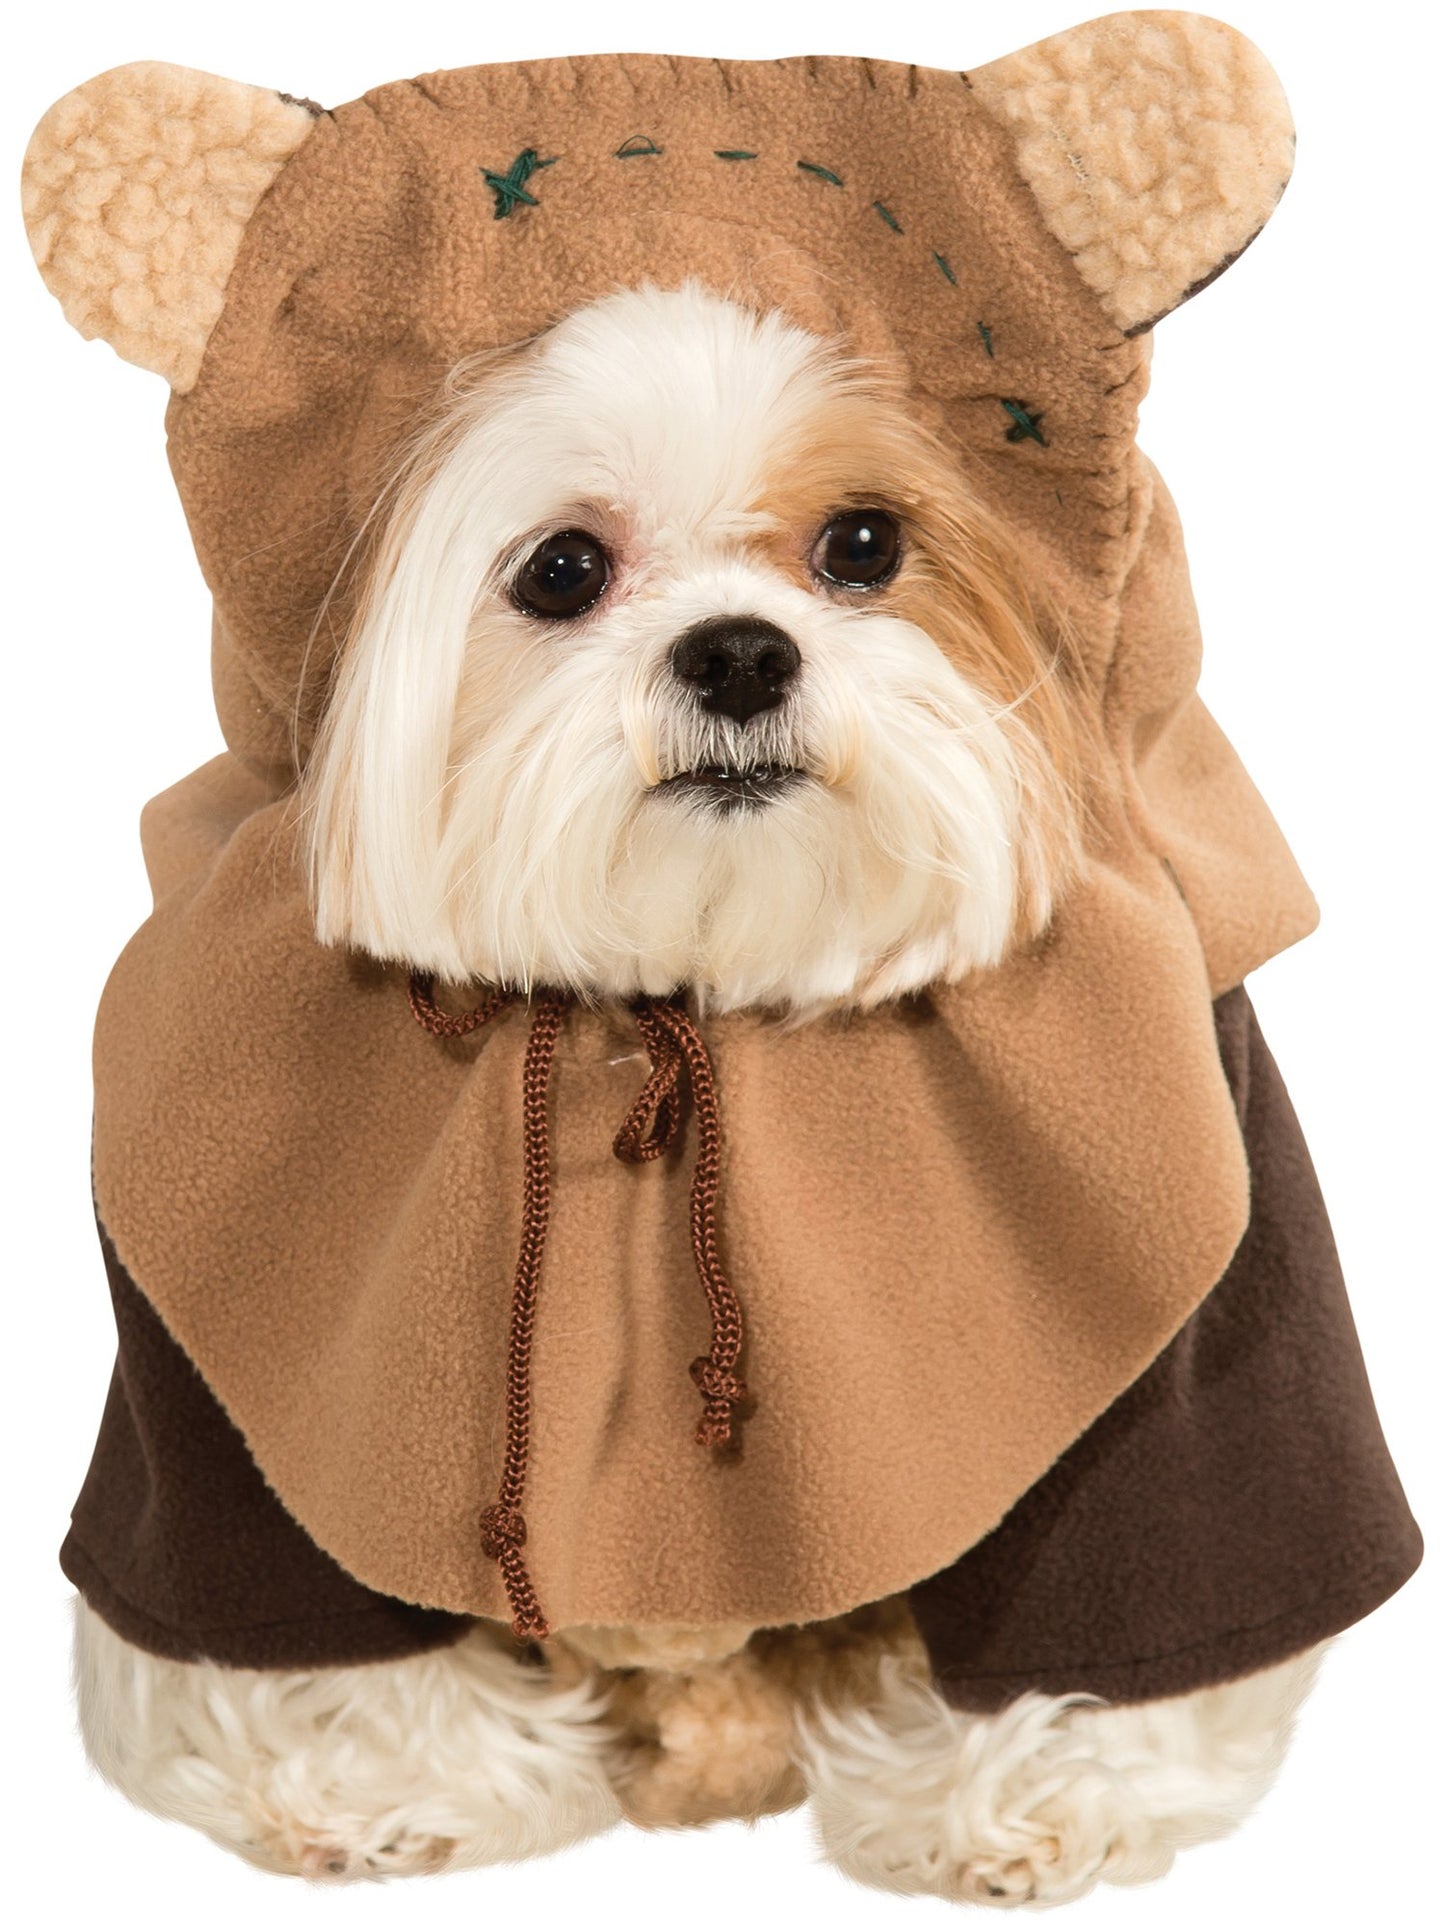 Star Wars Ewok Pet Costume - Medium